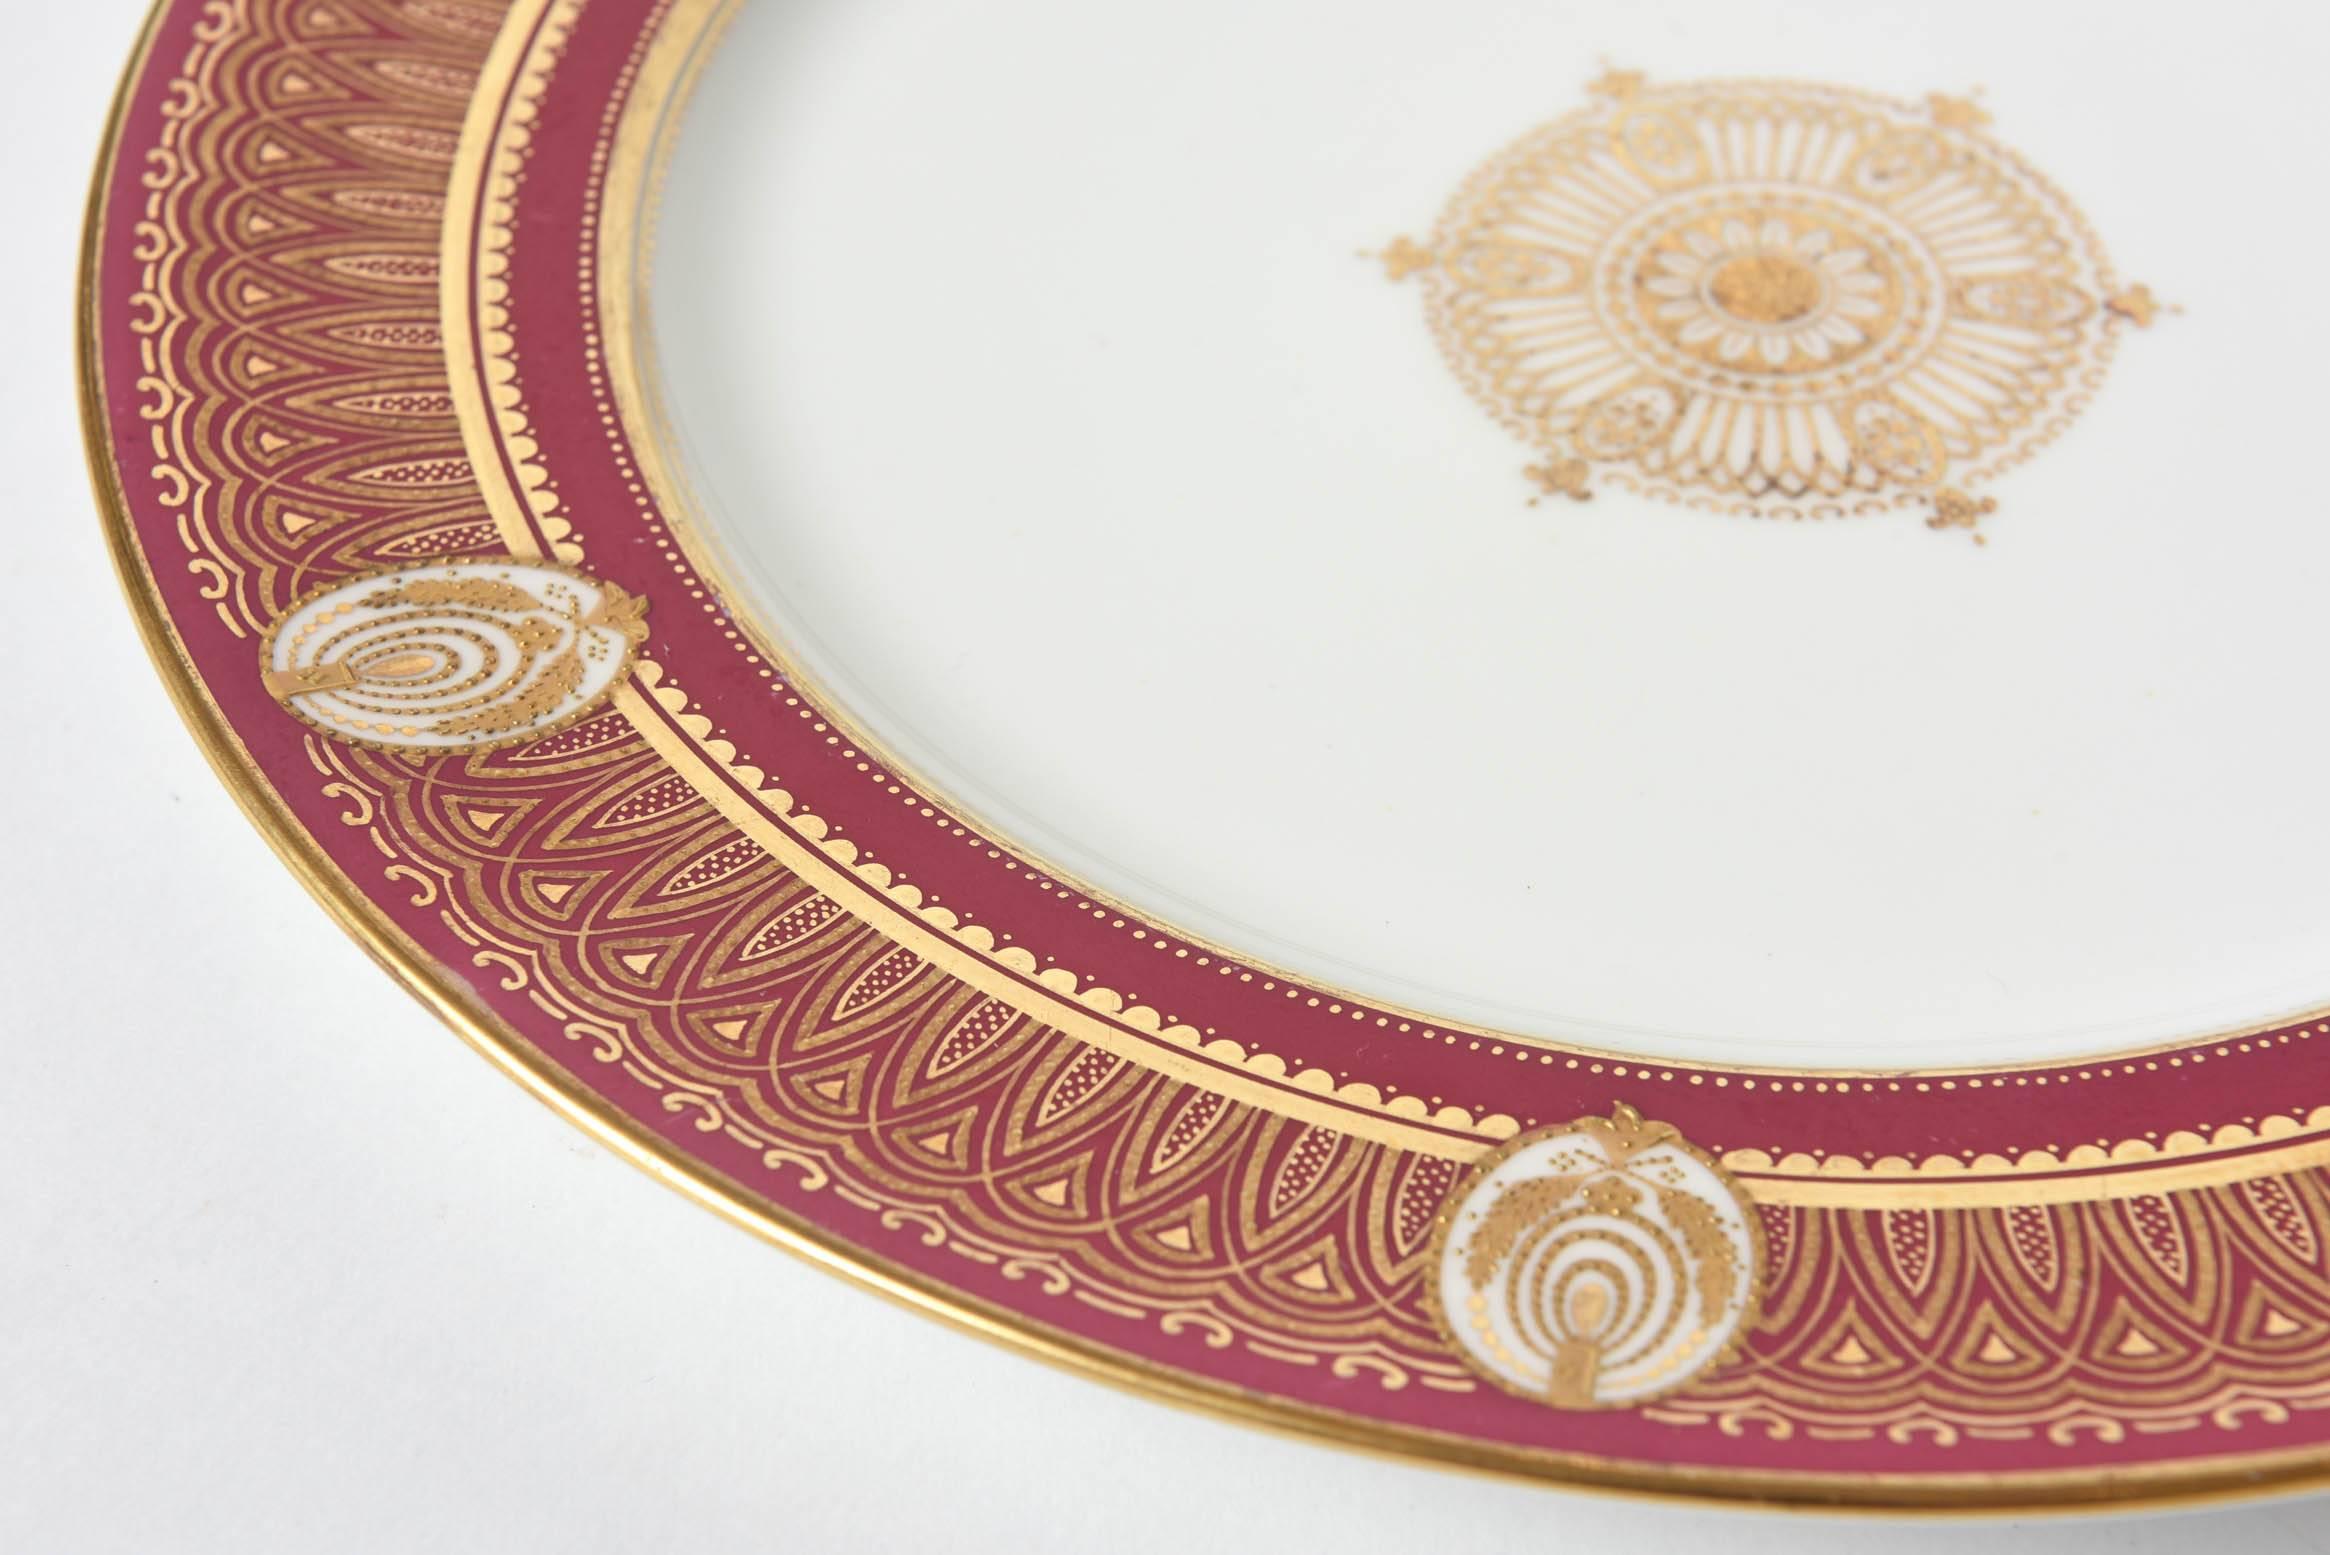 English Stunning Ruby Red & Gilt Dinner Plates, Gold Medallion Centers, Raised Detail.11